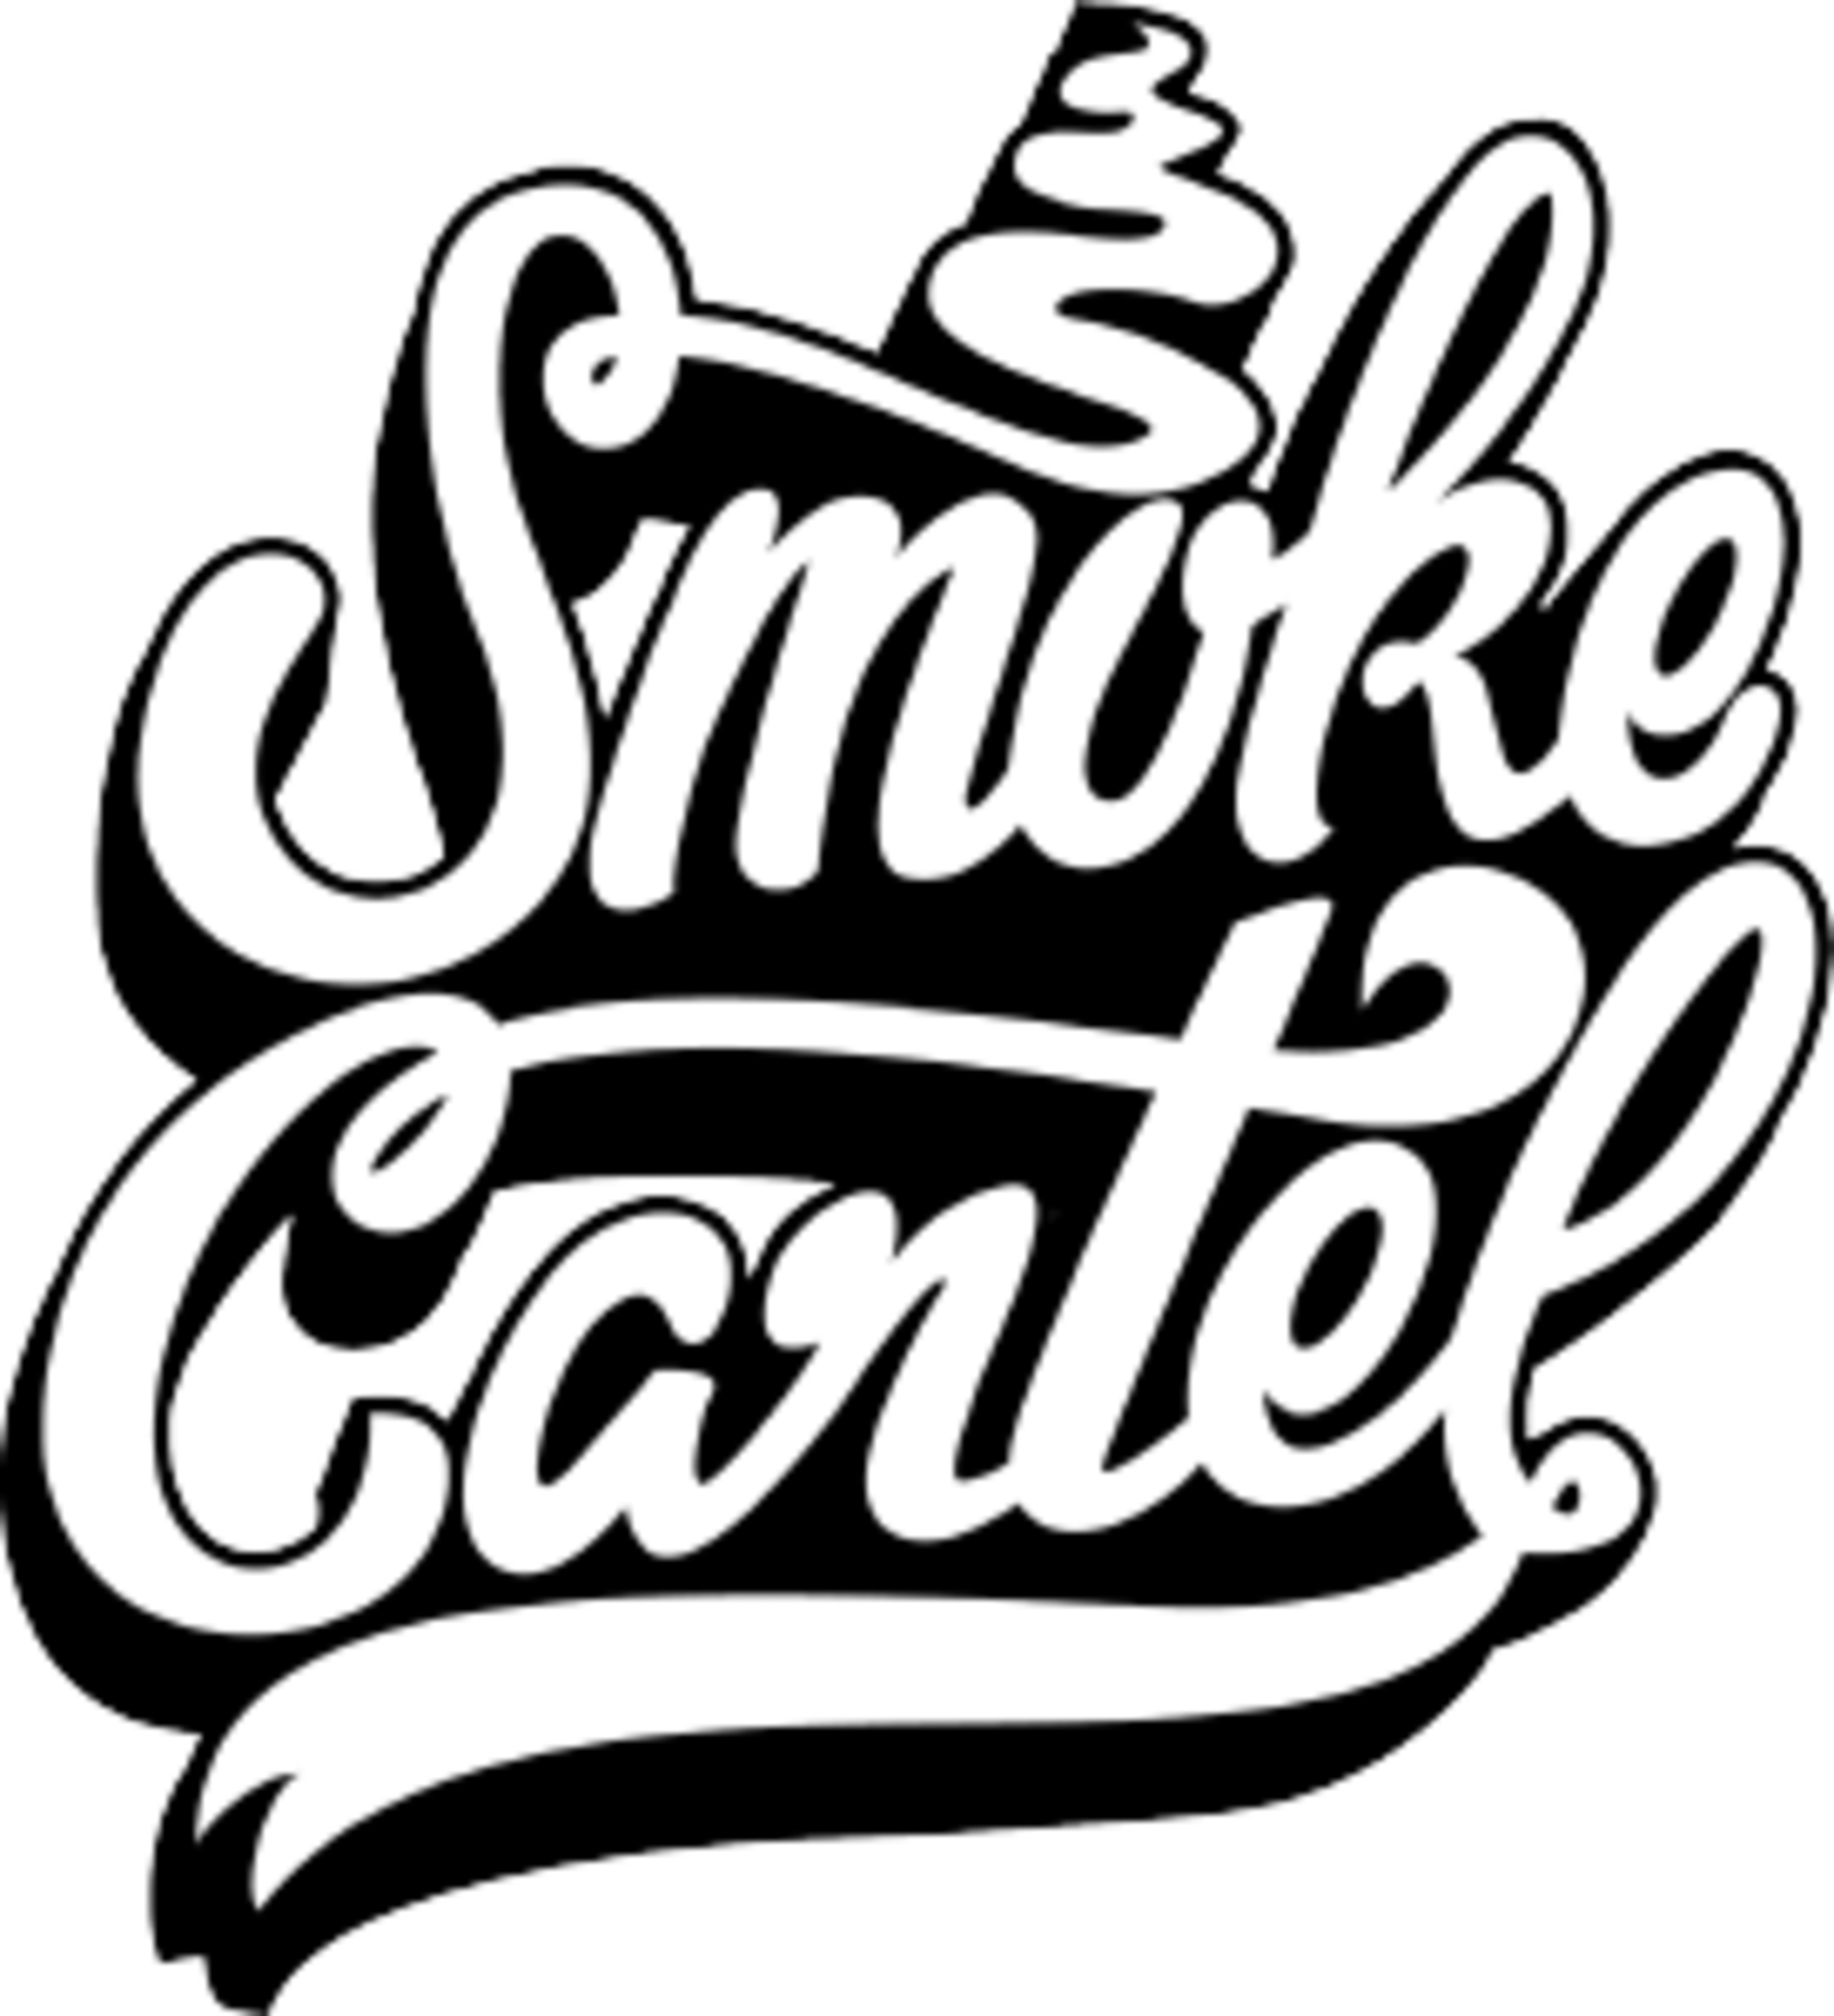 Smoke Cartel US Code